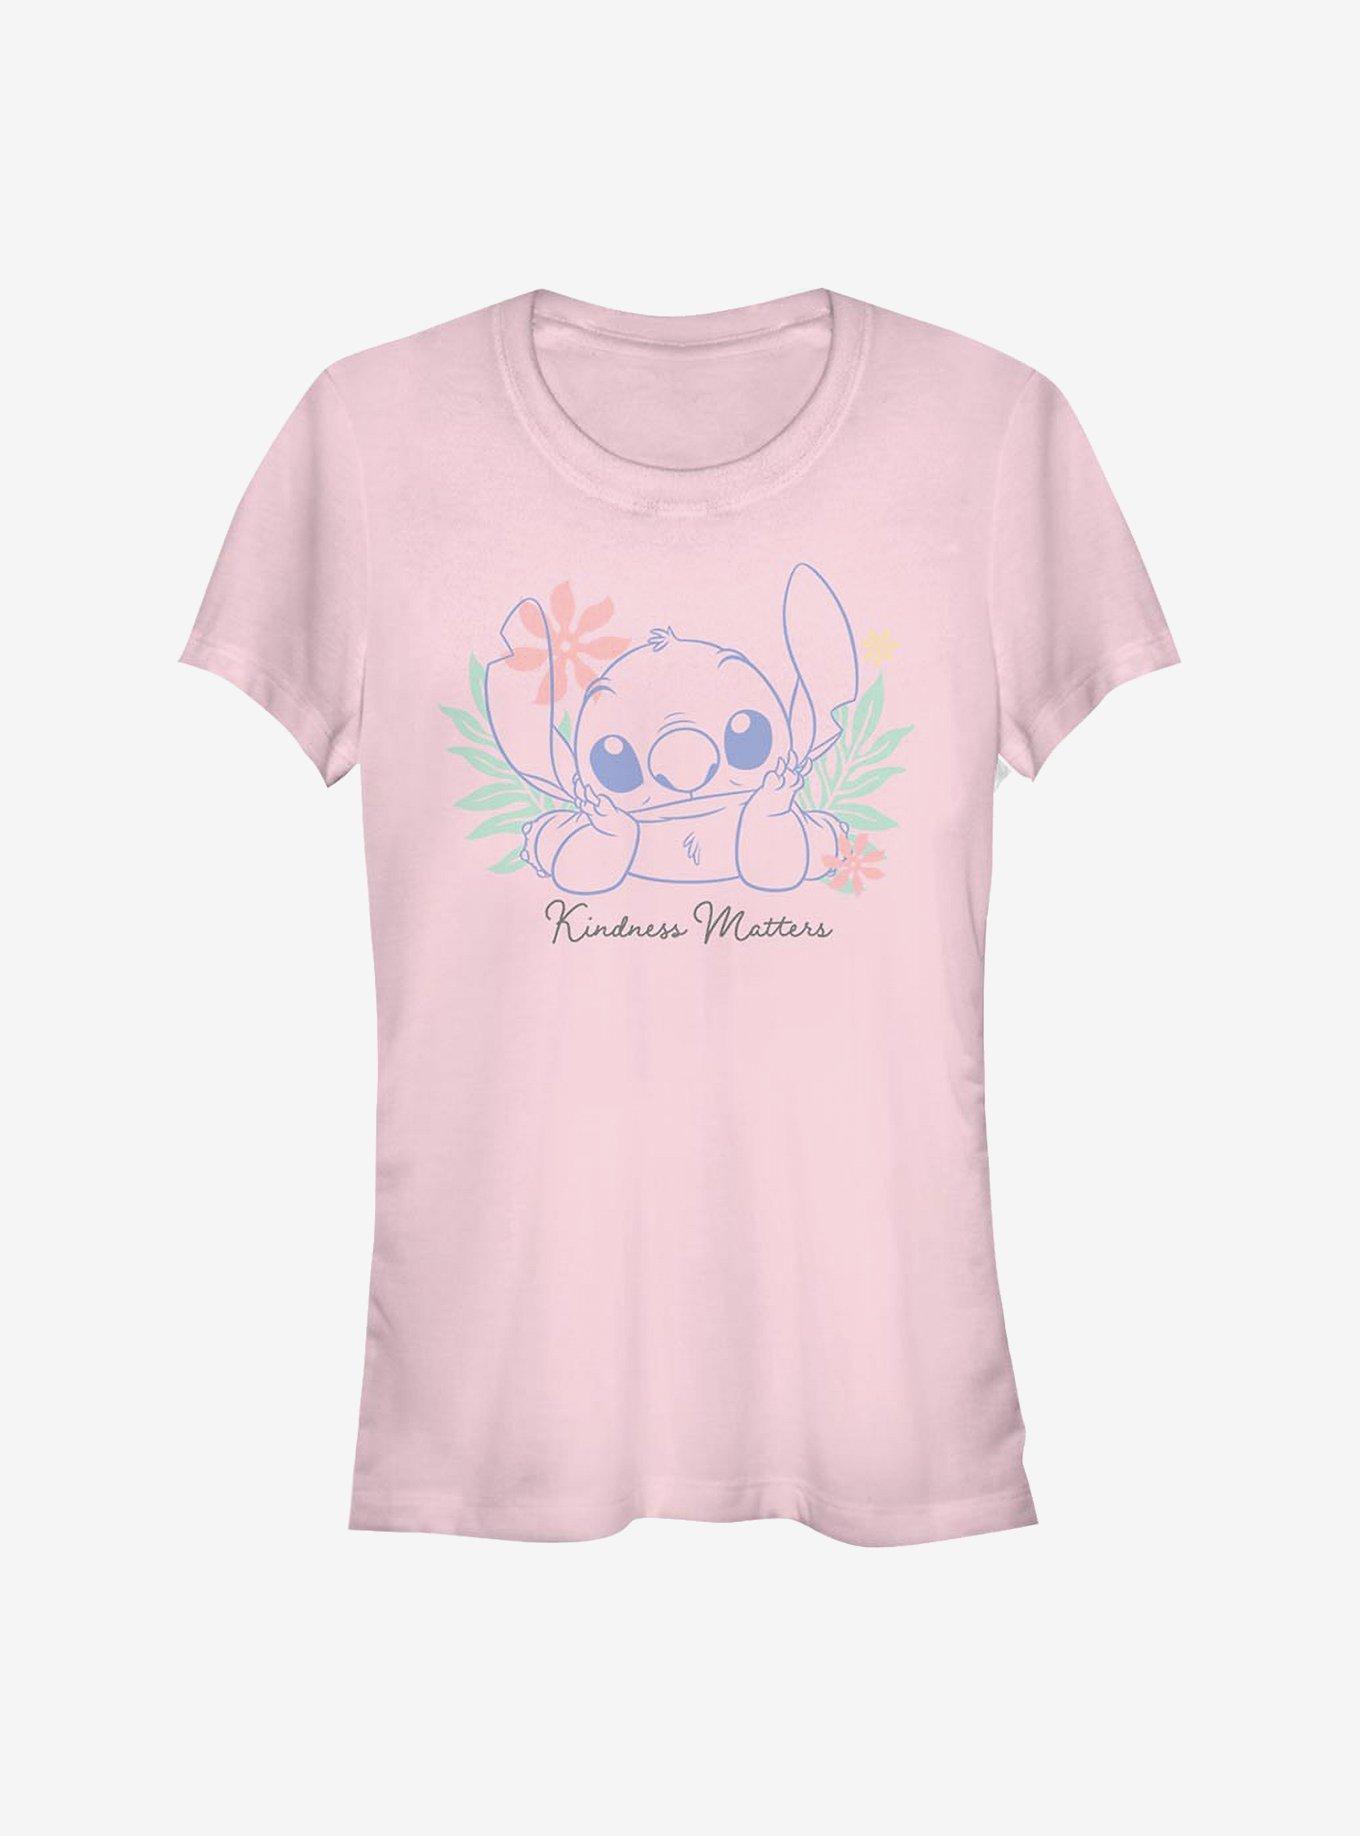 Disney Lilo & Stitch Kindness Matters Girls T-Shirt